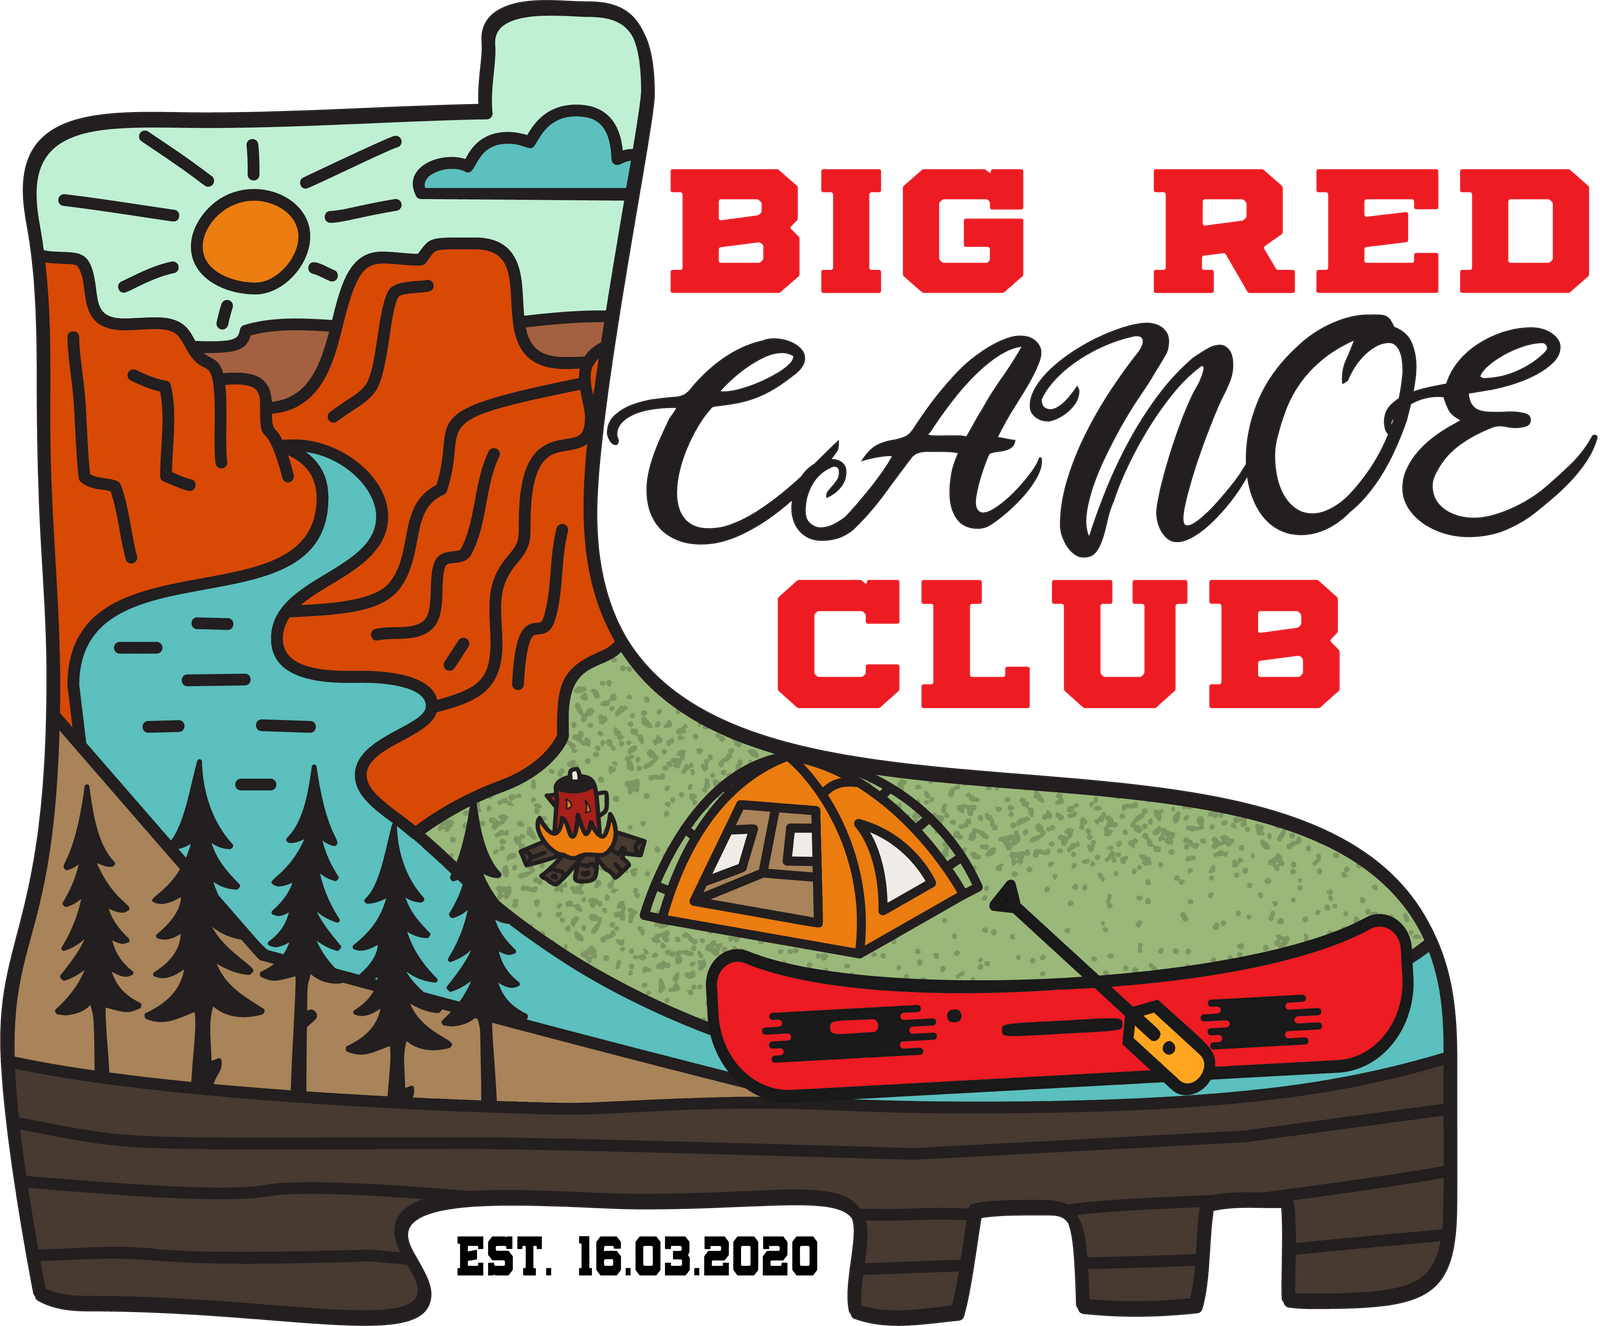 Big Red Canoe Club